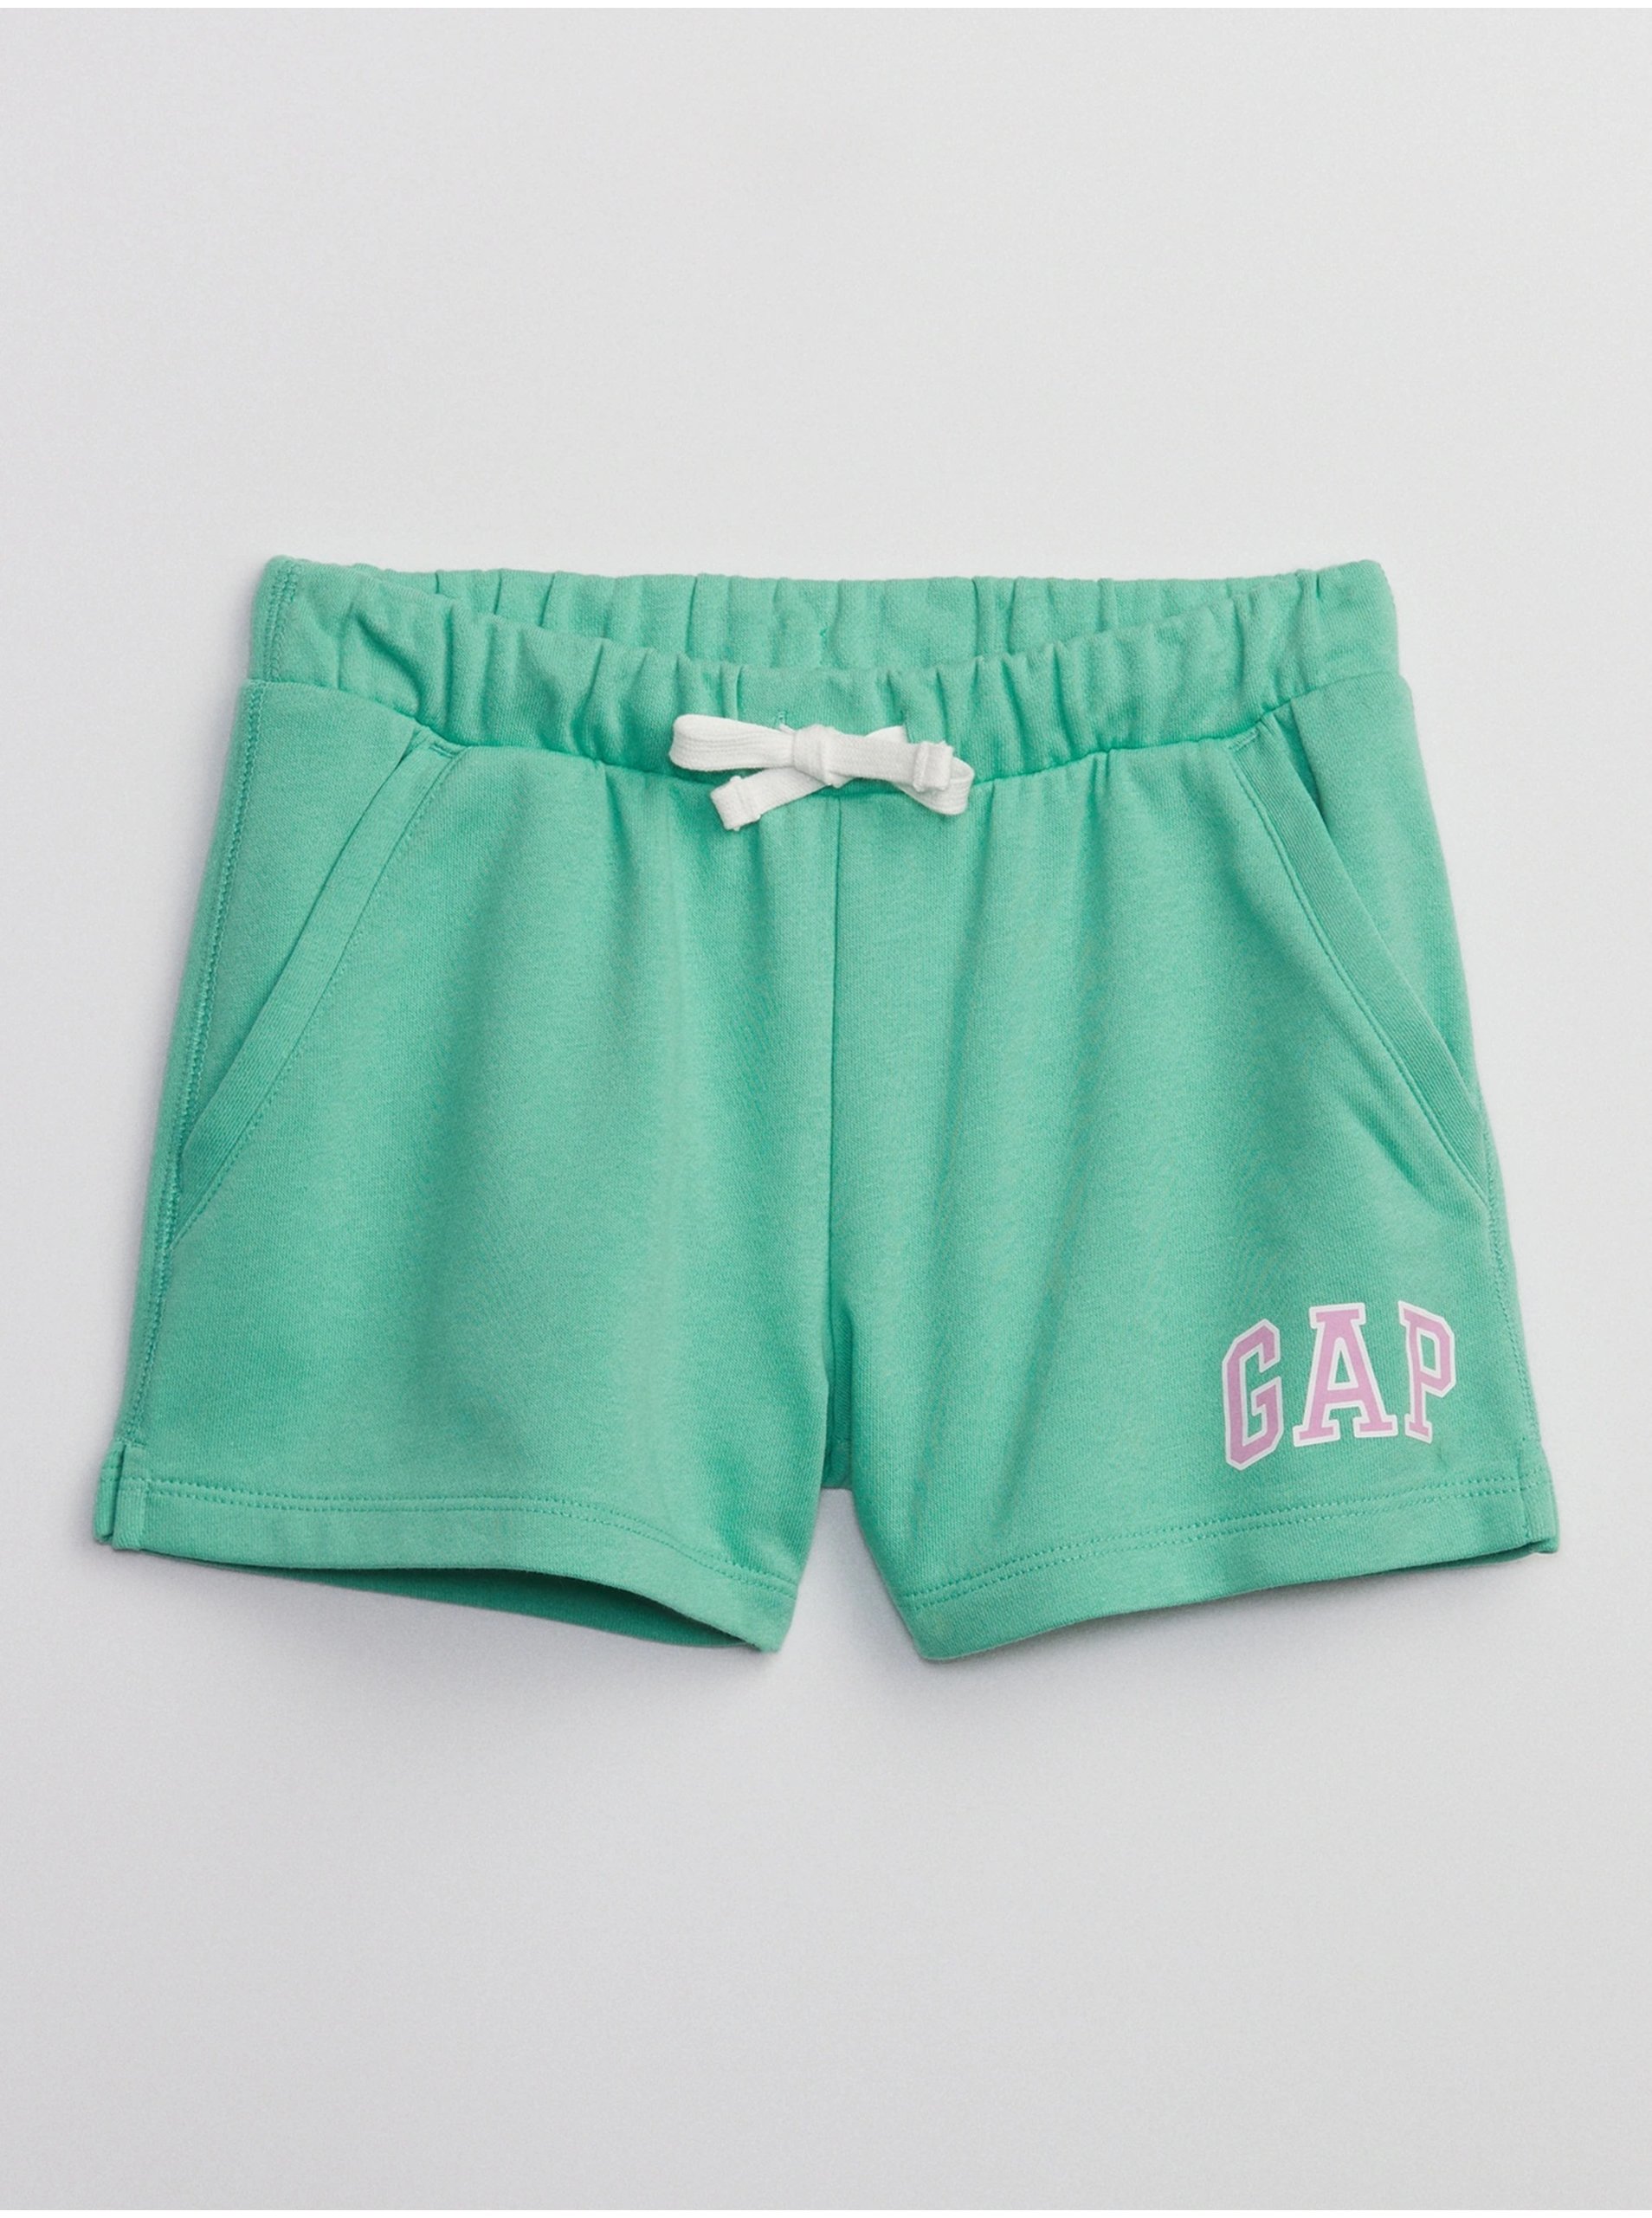 Lacno Zelené detské šortky s logom GAP